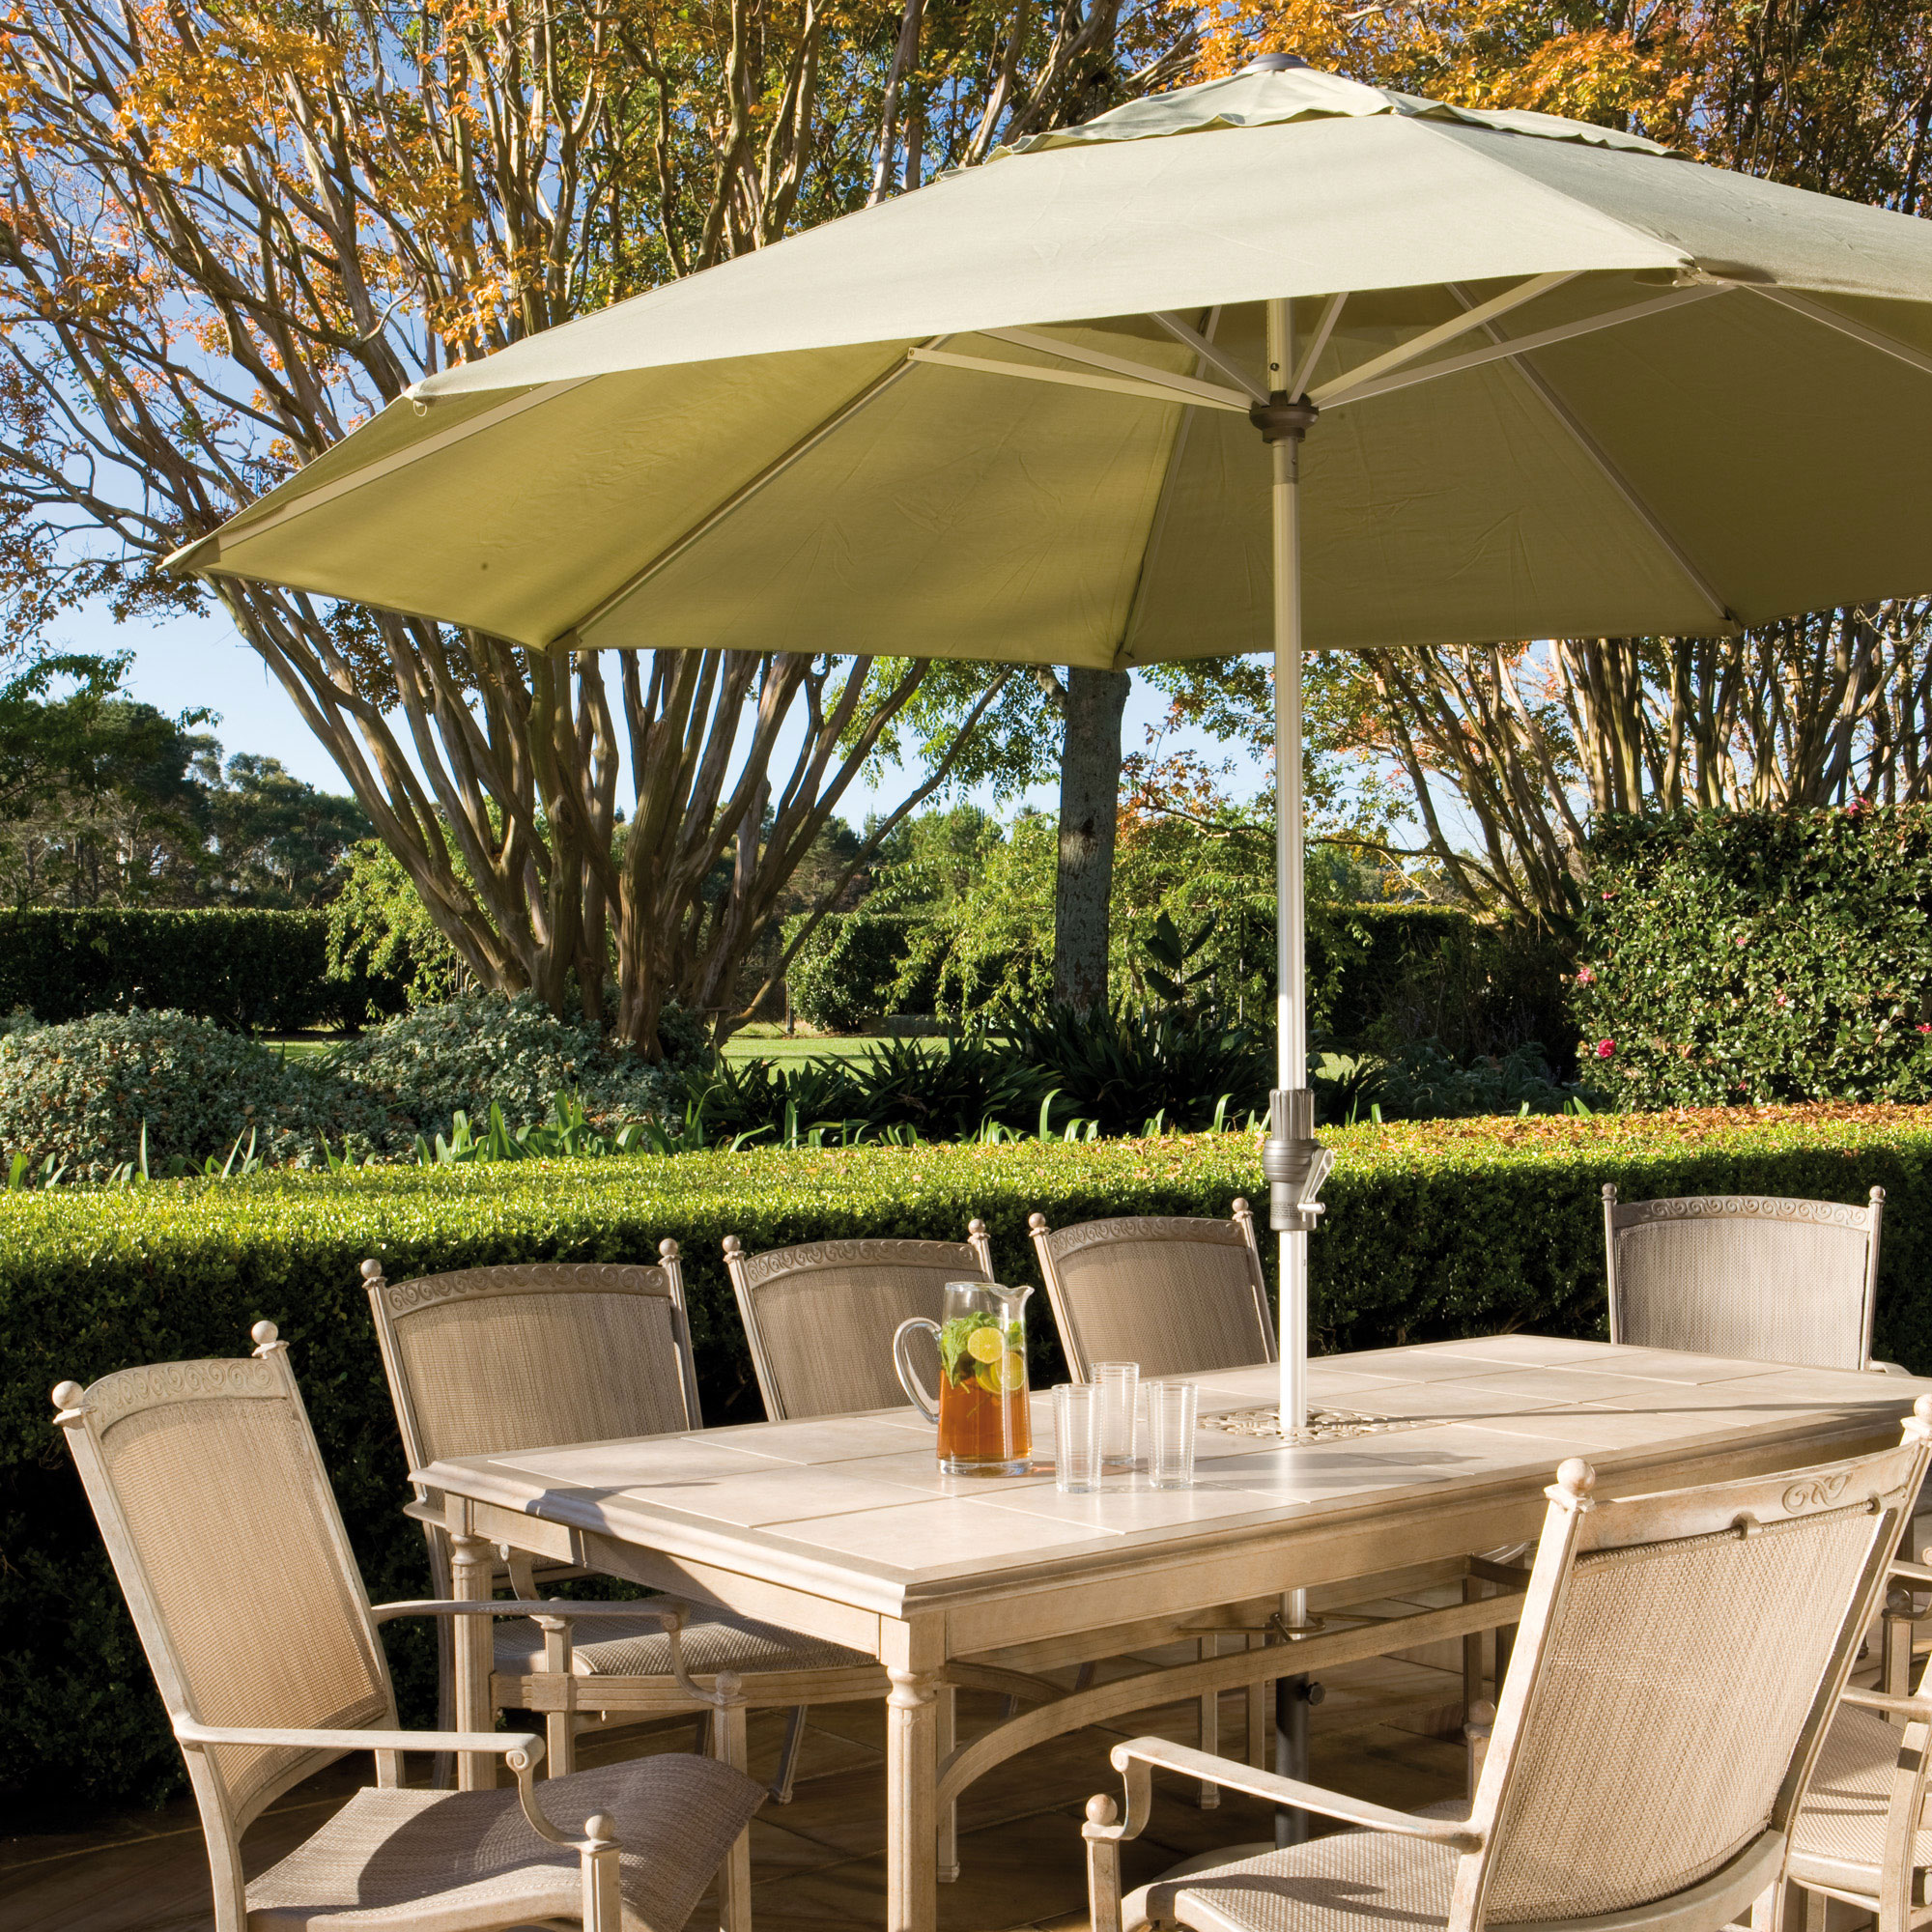 Outdoor Living Umbrellas for Your Bespoke Needs